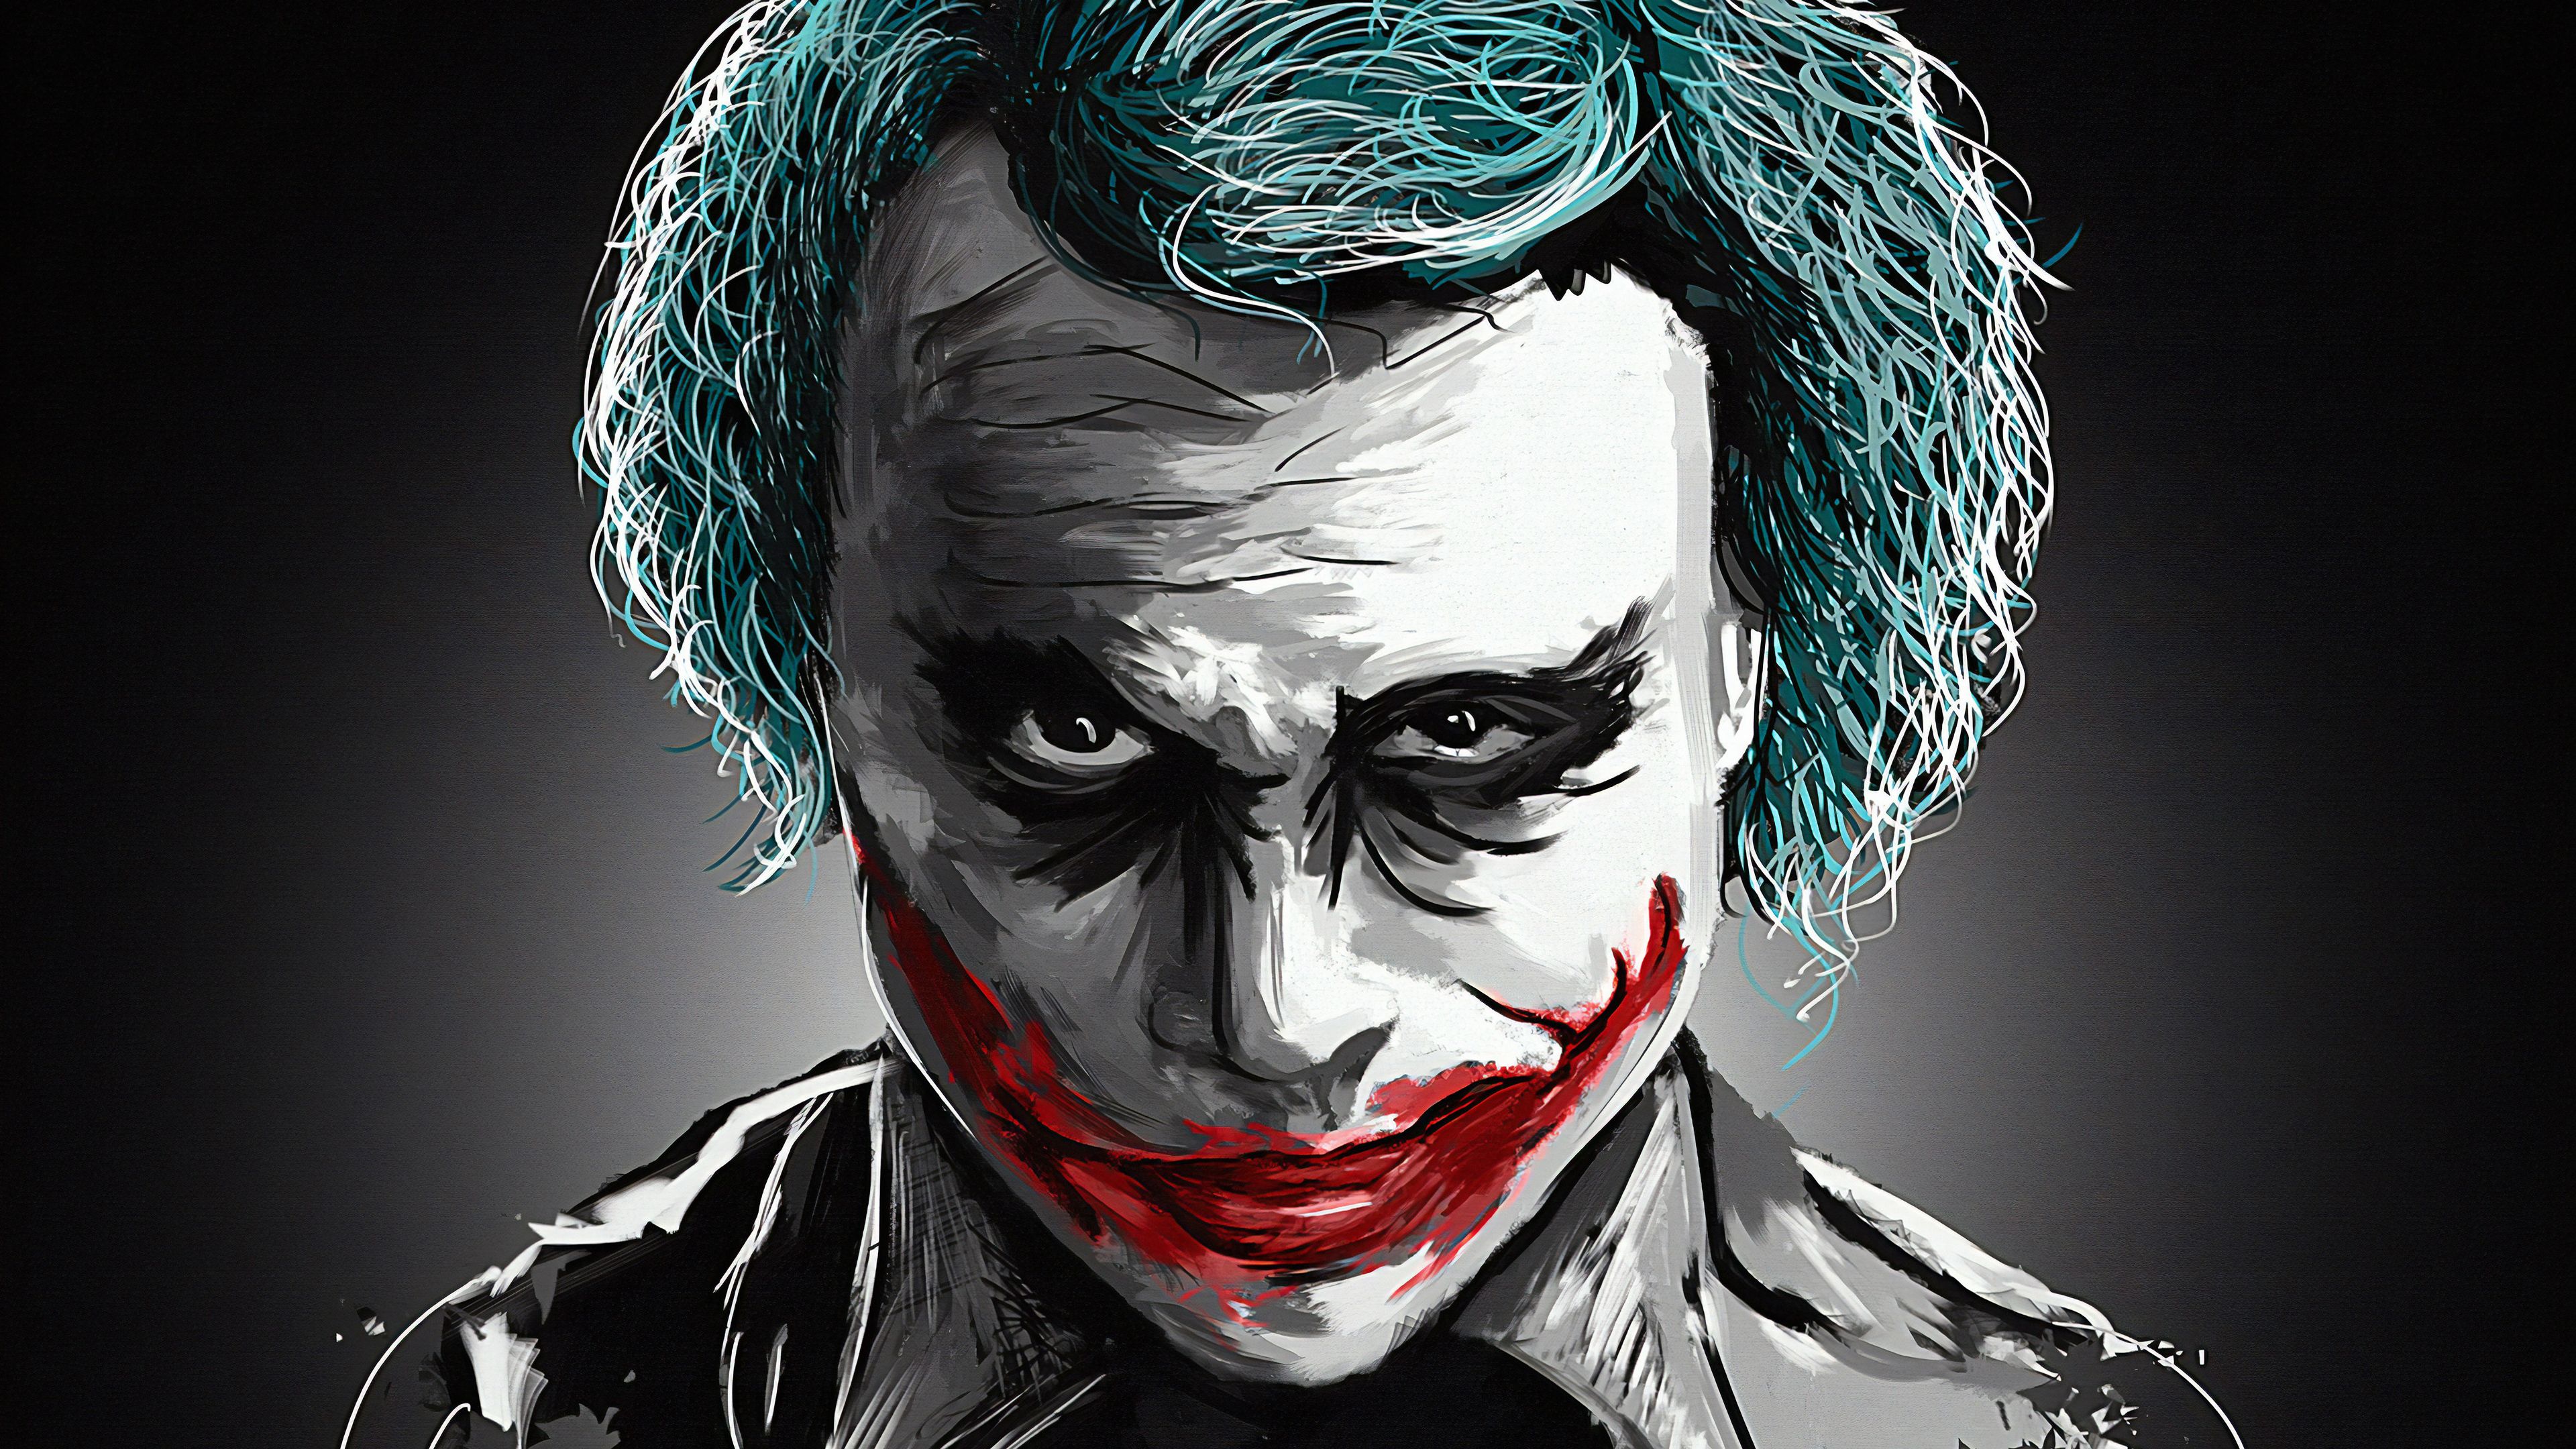 Joker Heath Ledger Art 4k, HD Superheroes, 4k Wallpaper, Image, Background, Photo and Picture